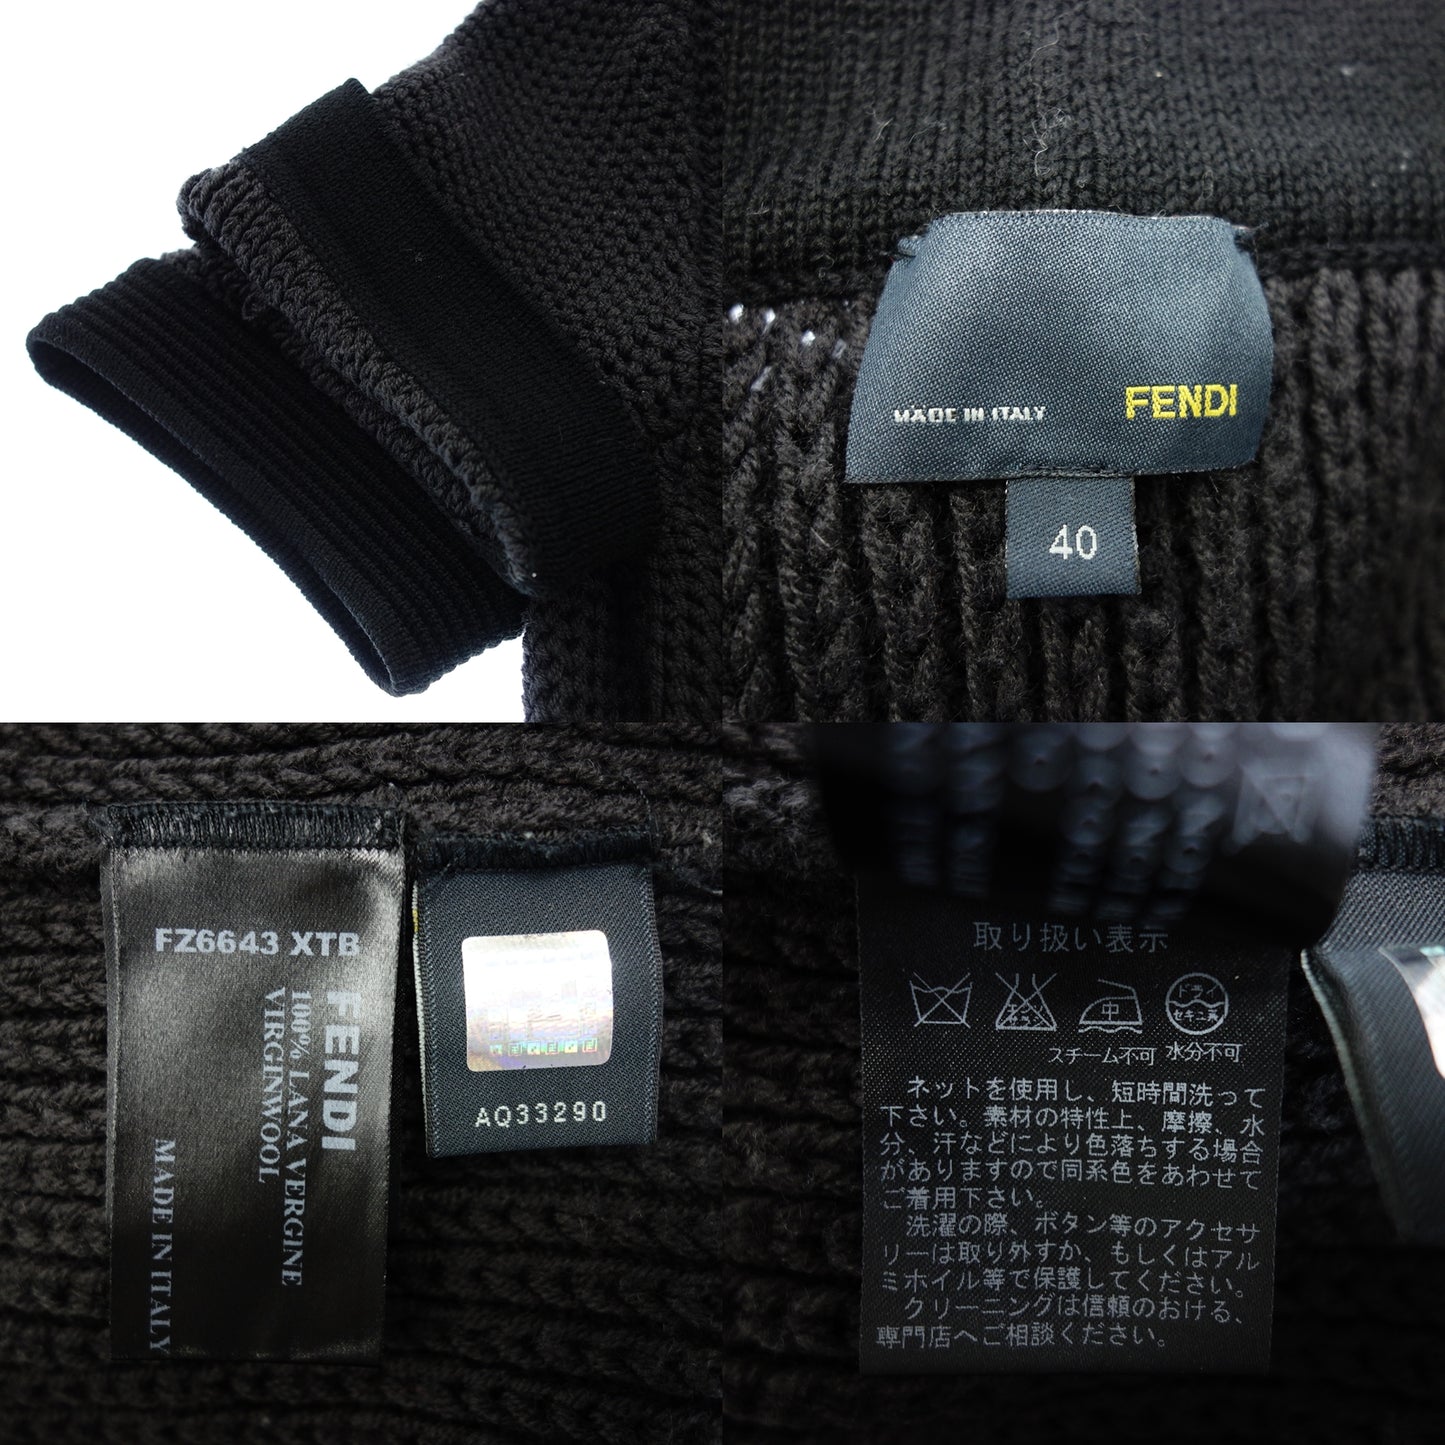 FENDI Knit Dress Cable Bicolor Women's Black 40 FENDI [AFB39] [Used] 